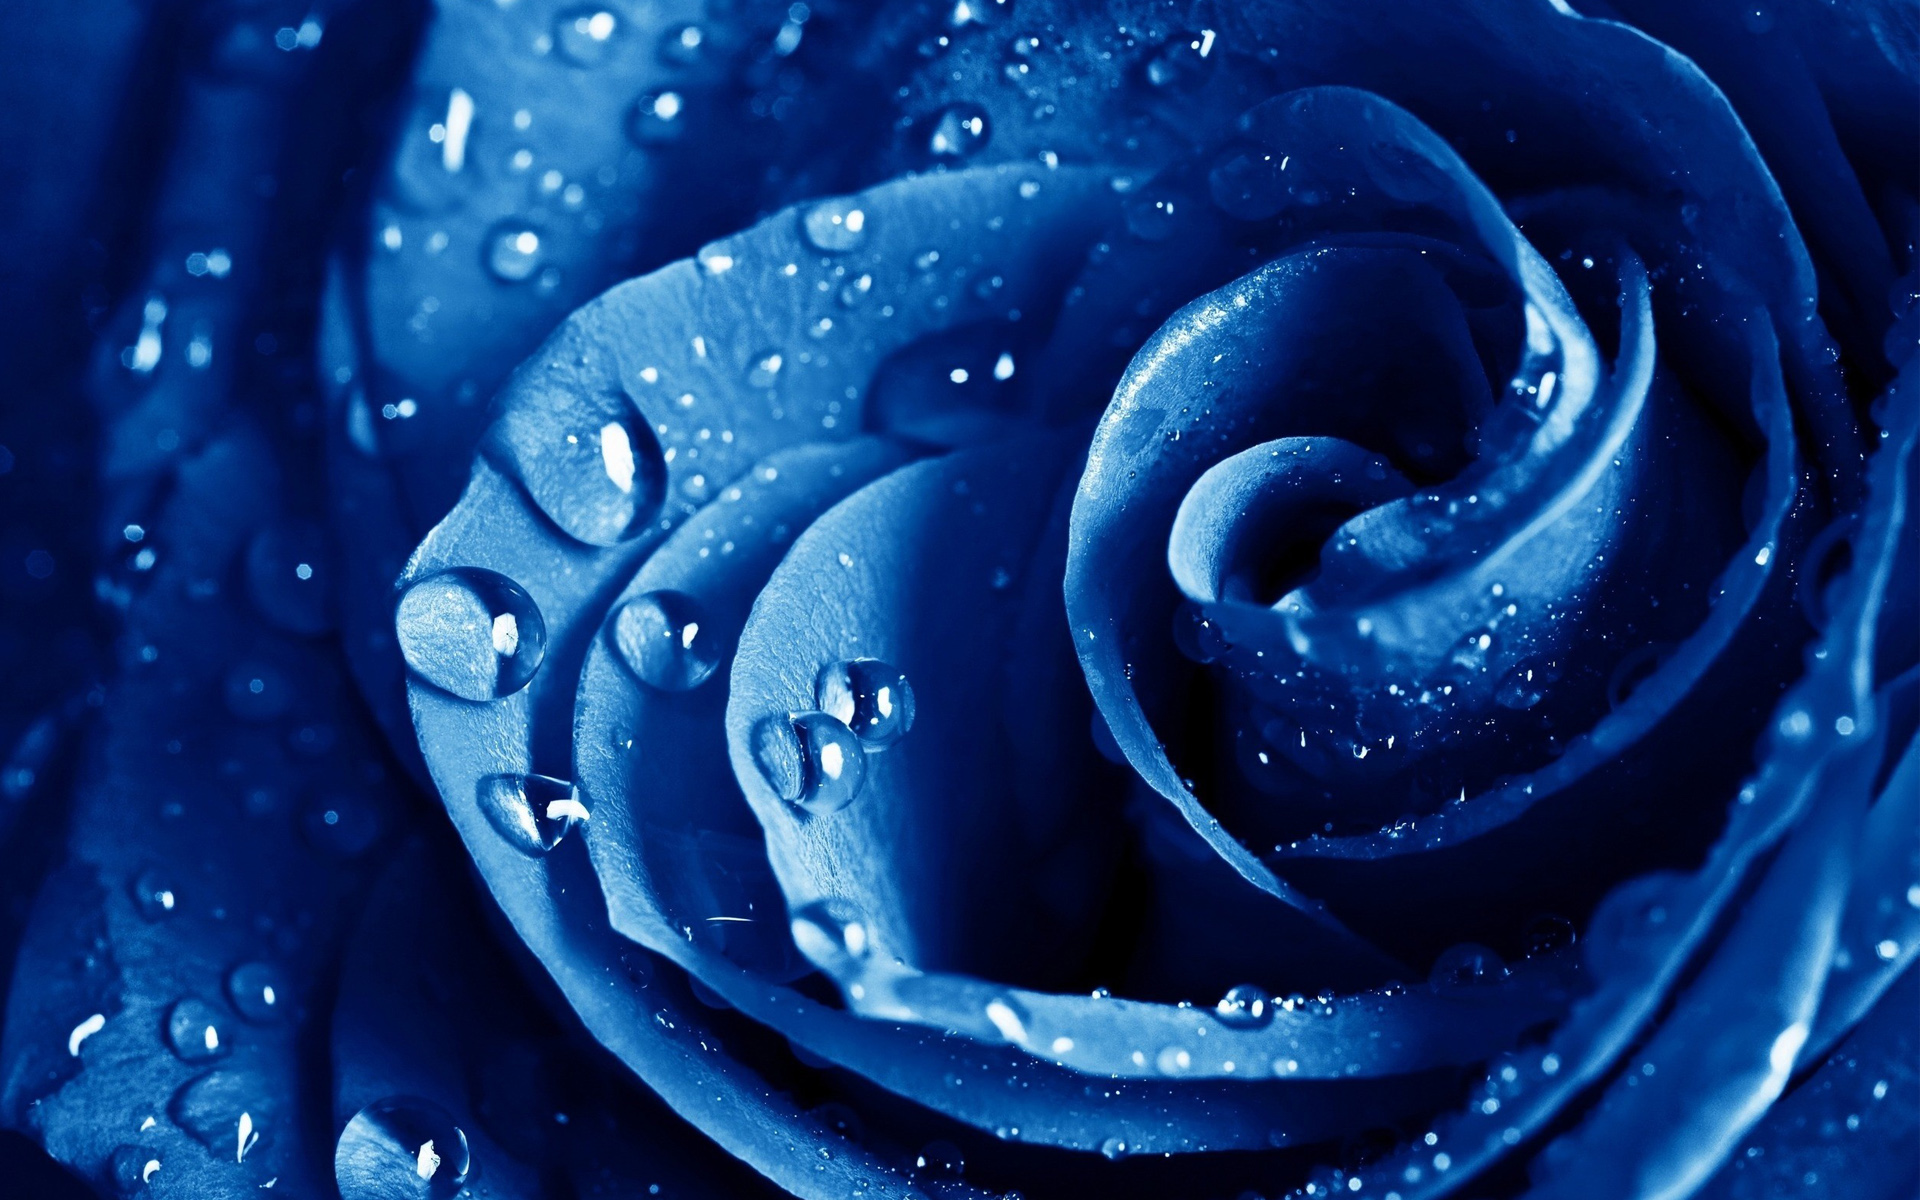  Blue Rose Wallpaper Full HD Image Free Download